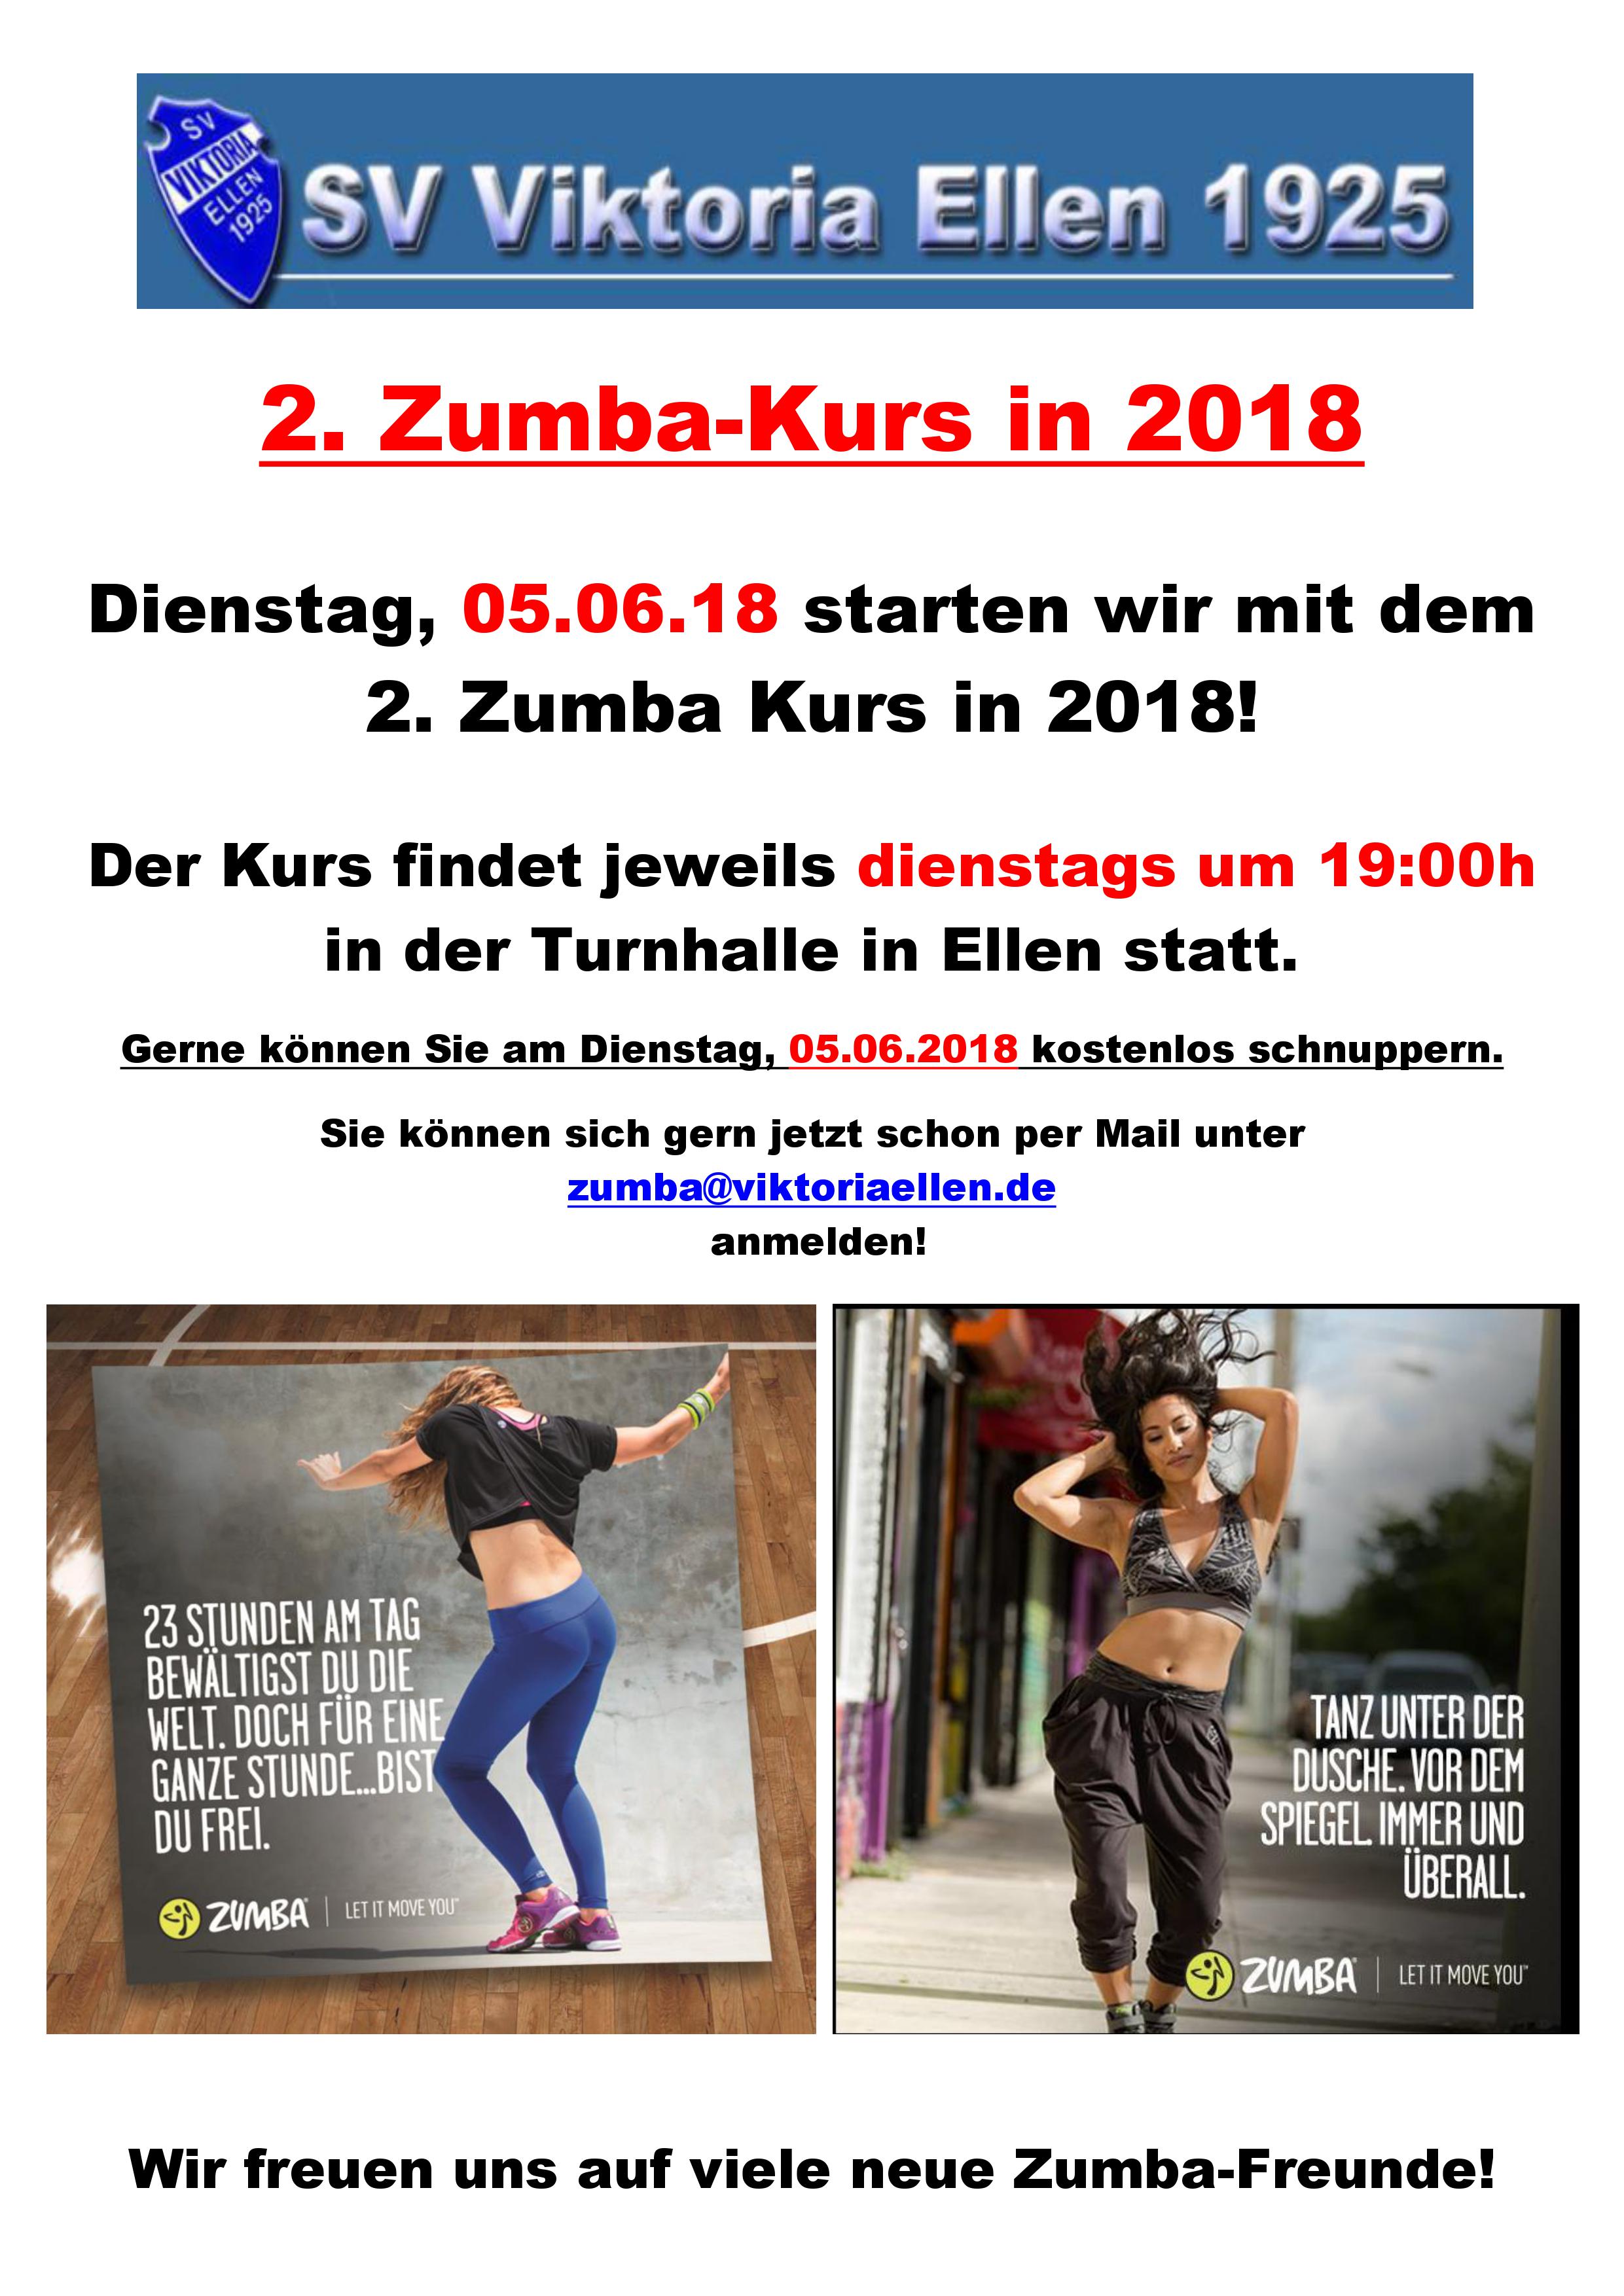 2. Zumba- Kurs in 2018 startet ab dem 05. Juni